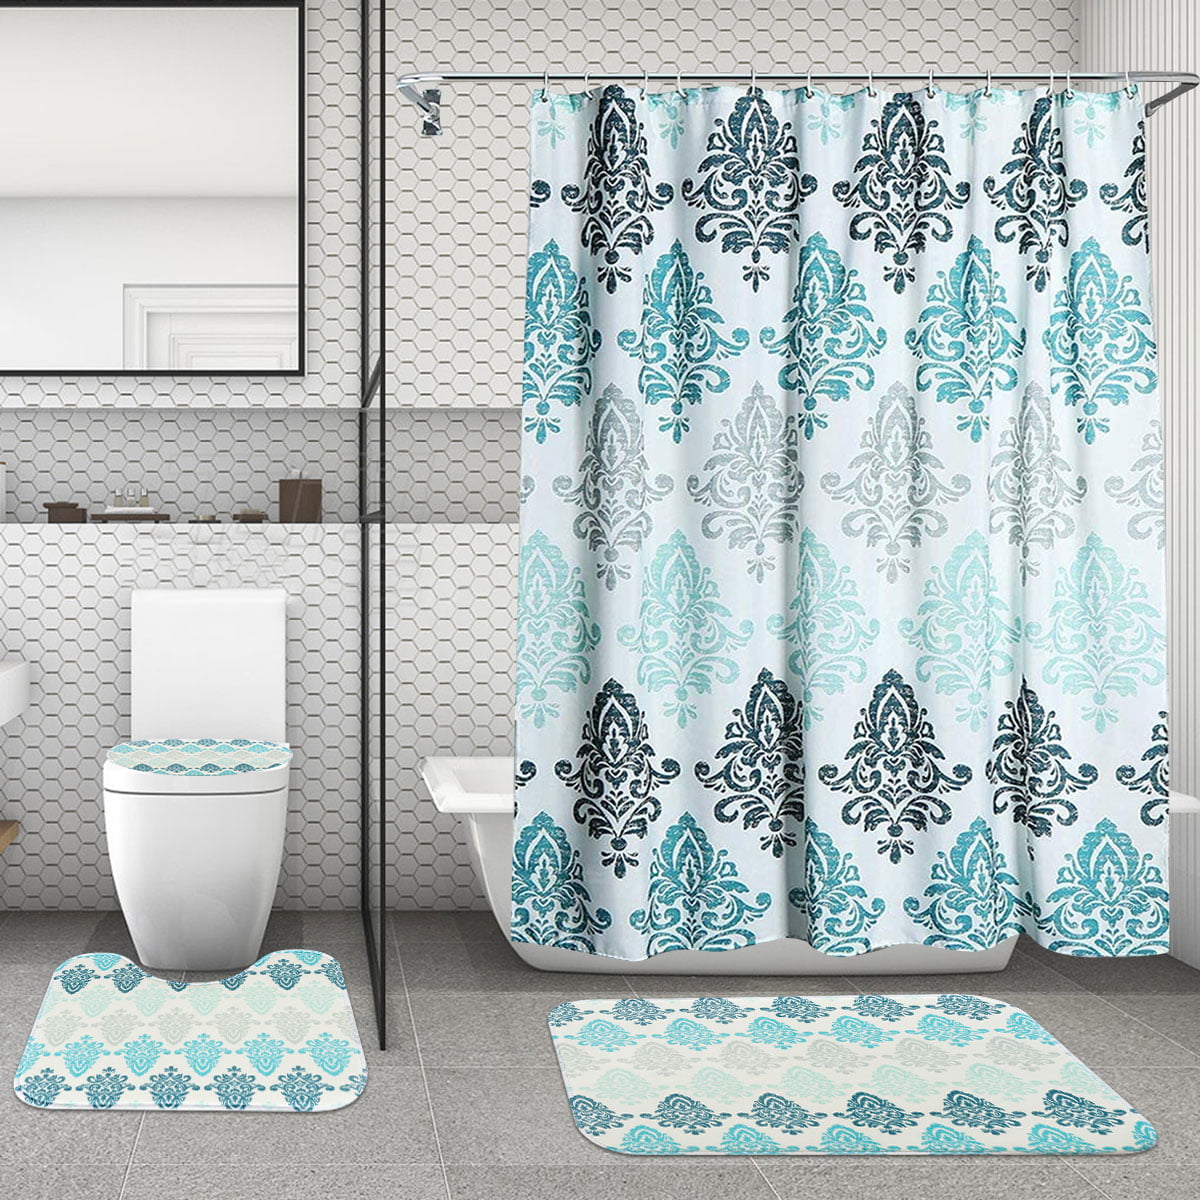 Details about   1/3/4 Bathroom Waterproof Shower Curtain with Hooks Non-slip Toielt Mats Ru 